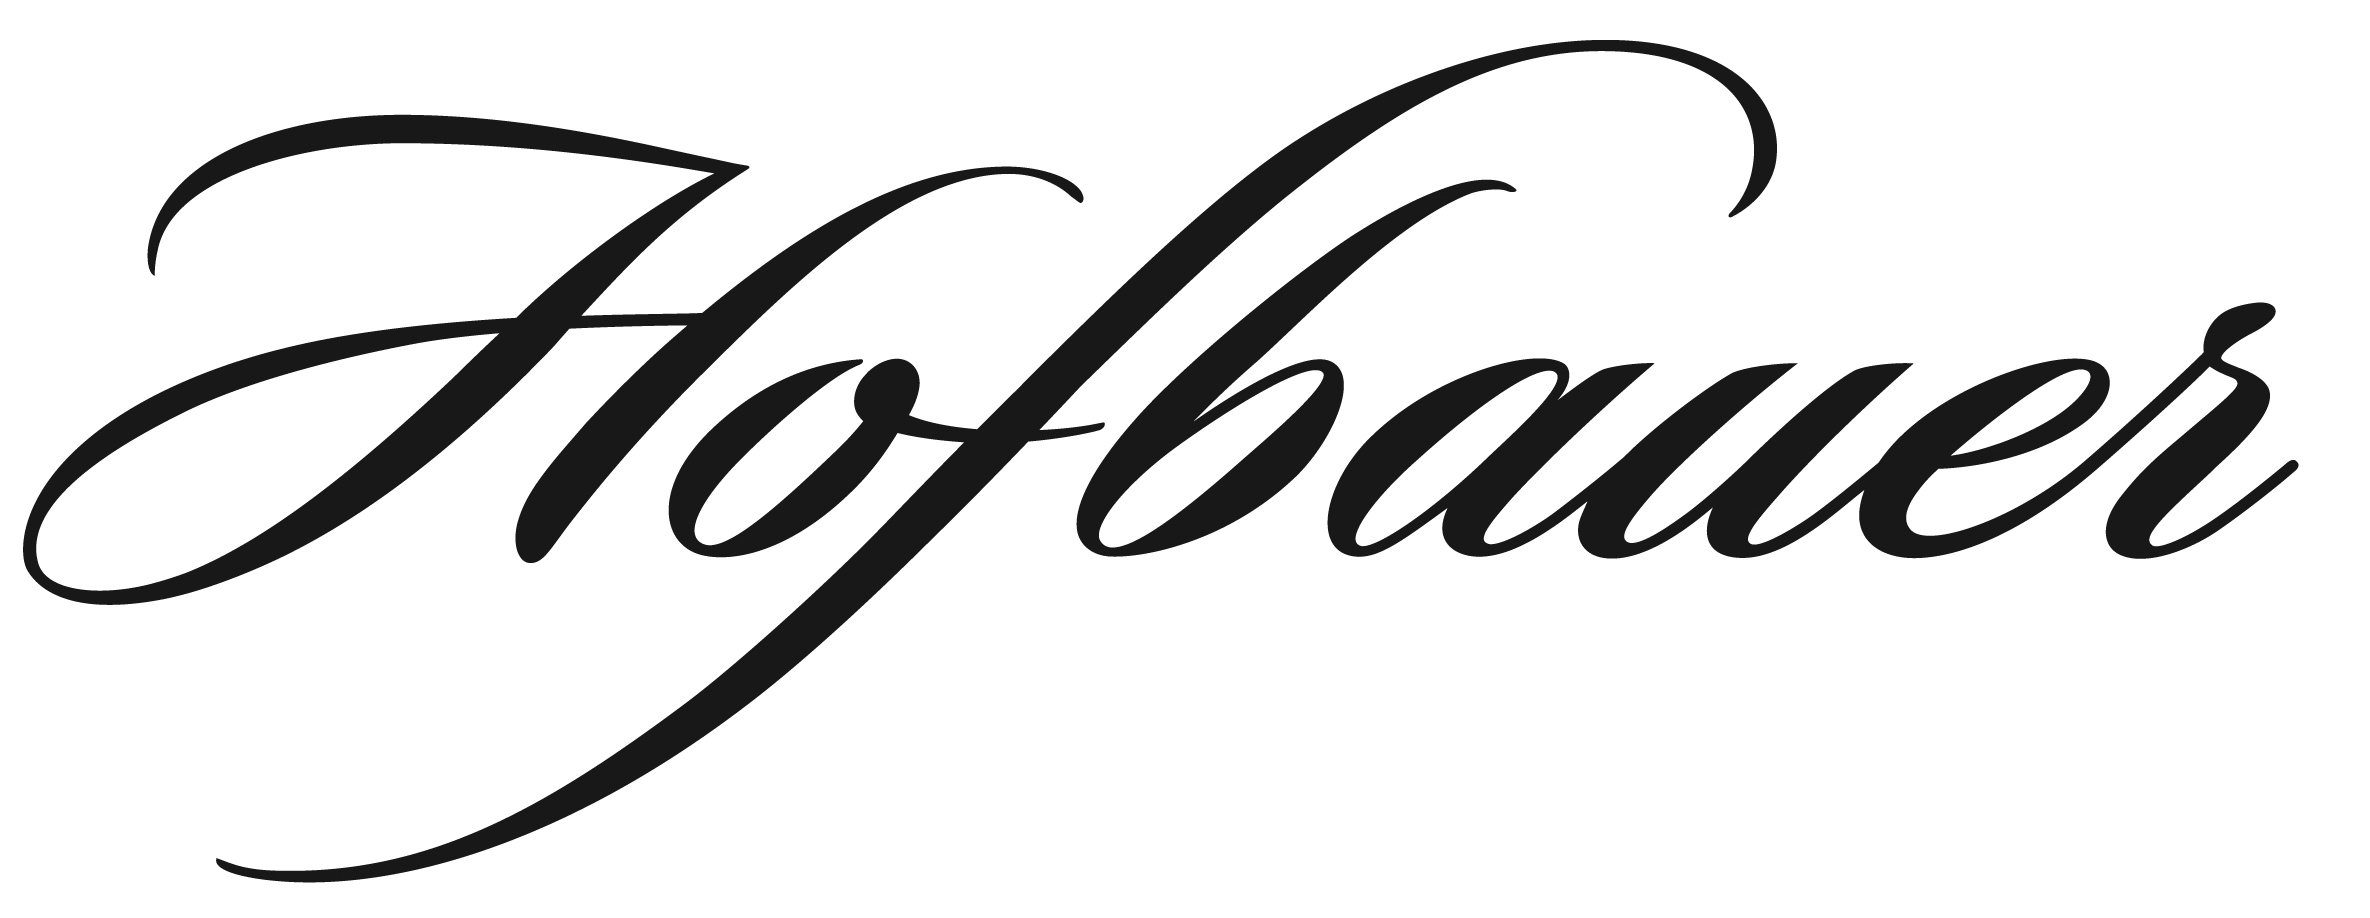 Trademark Logo HOFBAUER